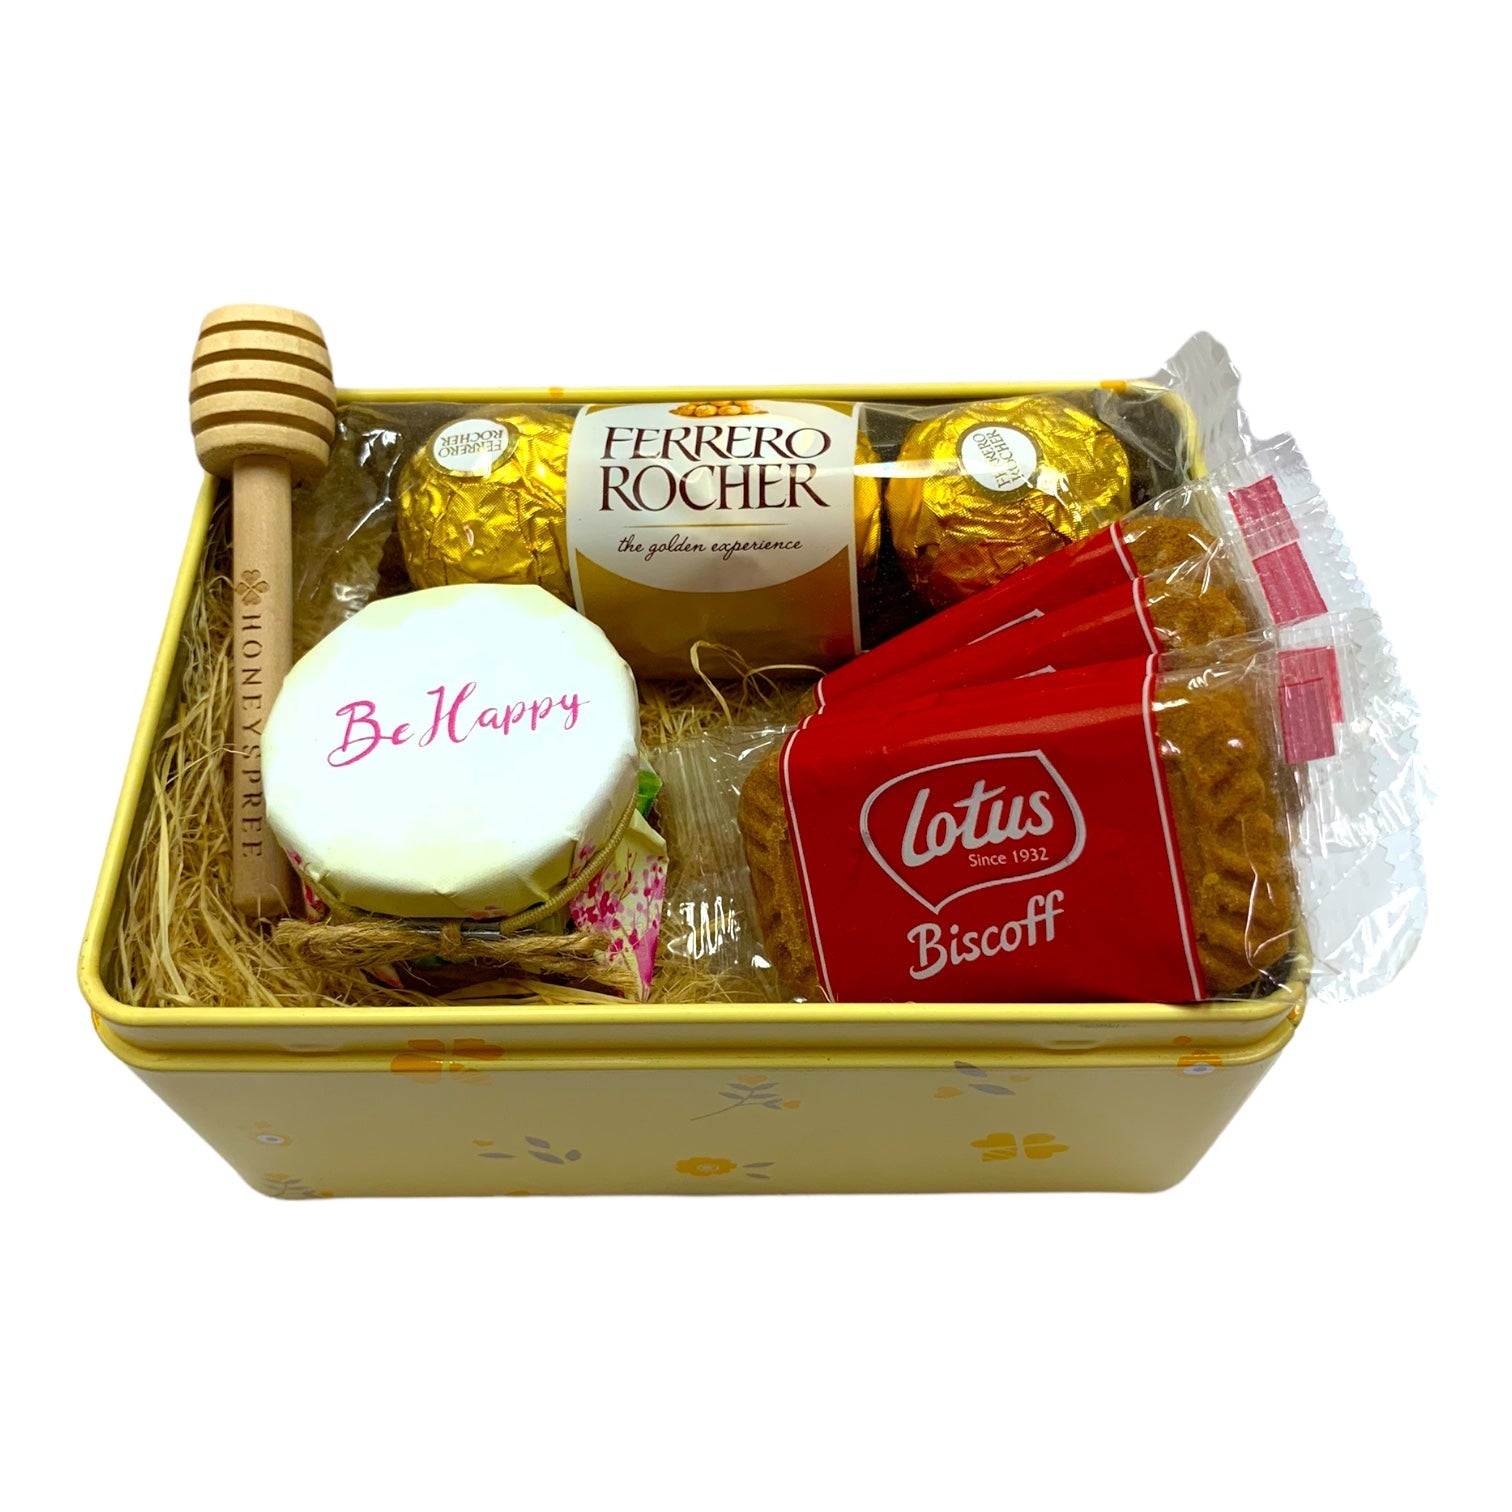 Motivational Honey Gifts - Be Happy Mini Honey Jars